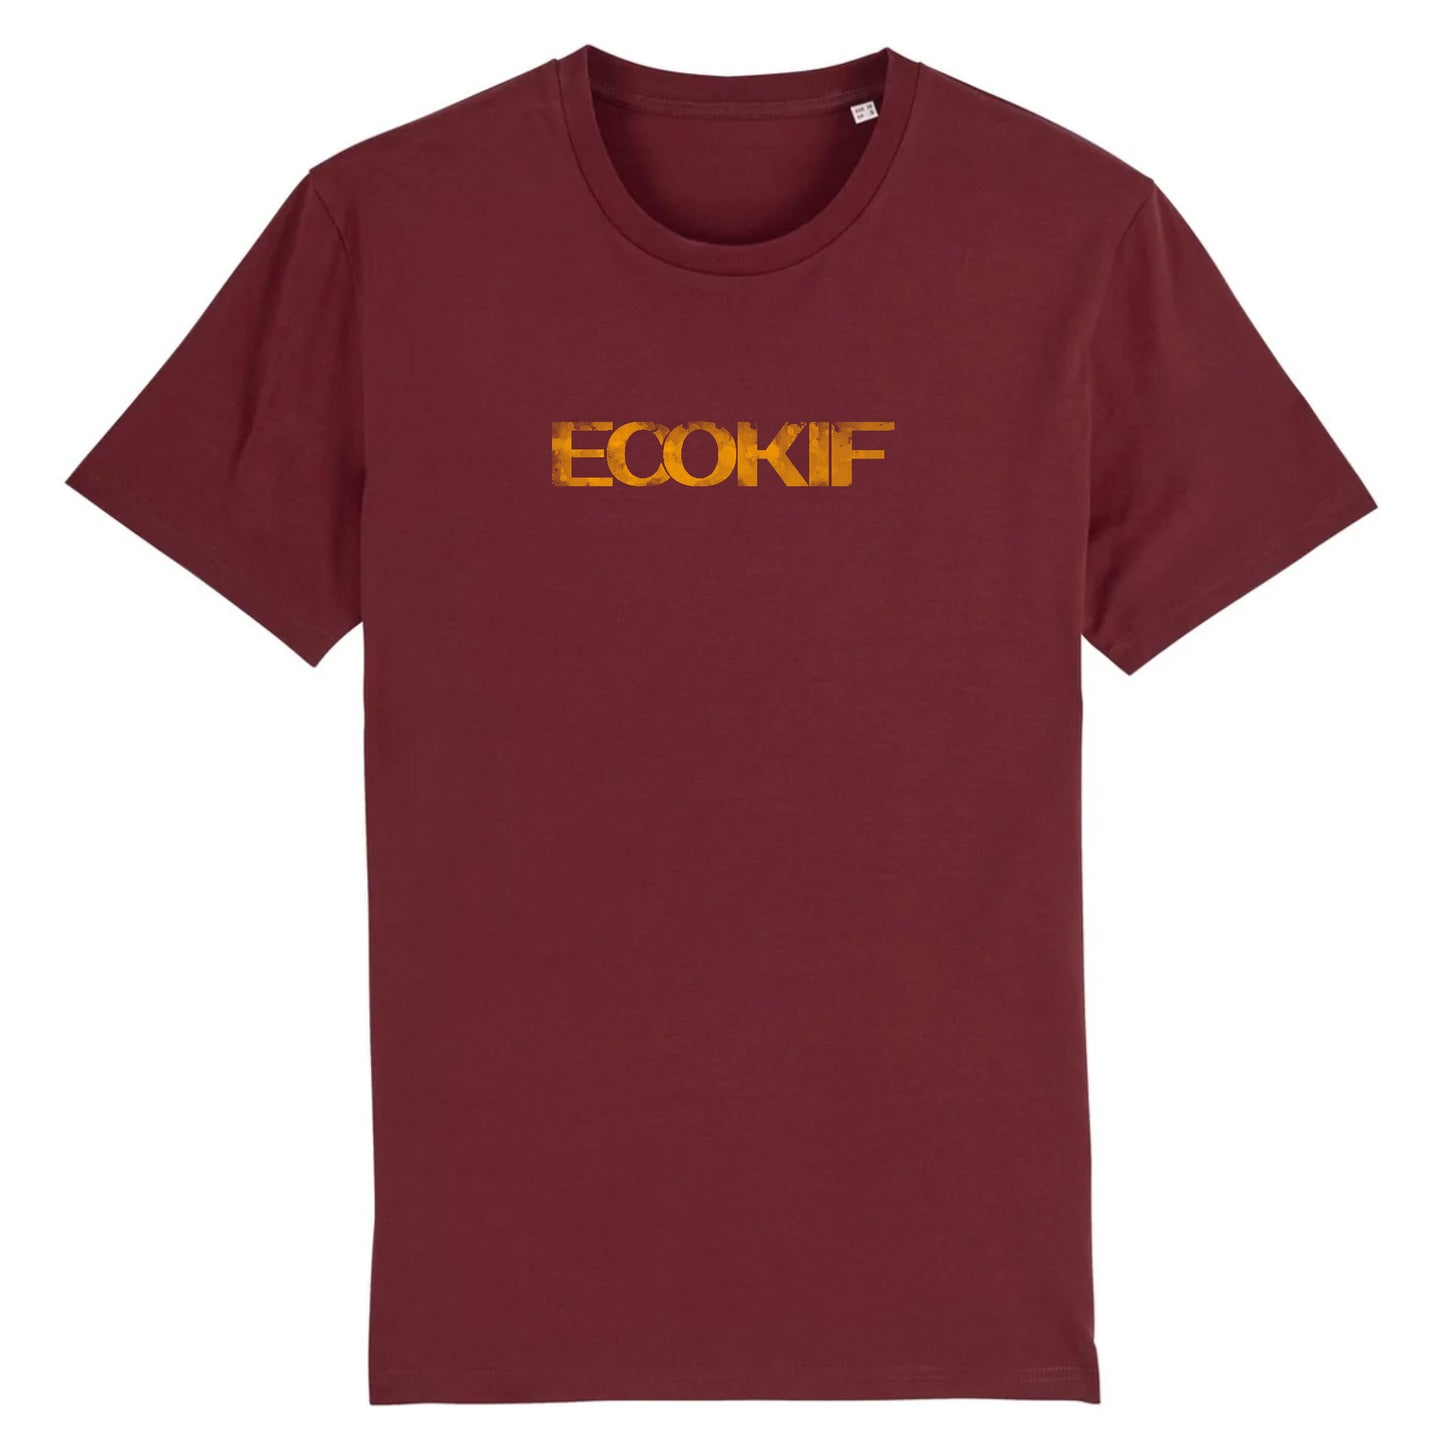 T-Shirt Unisexe U79 - Ecokif Unique